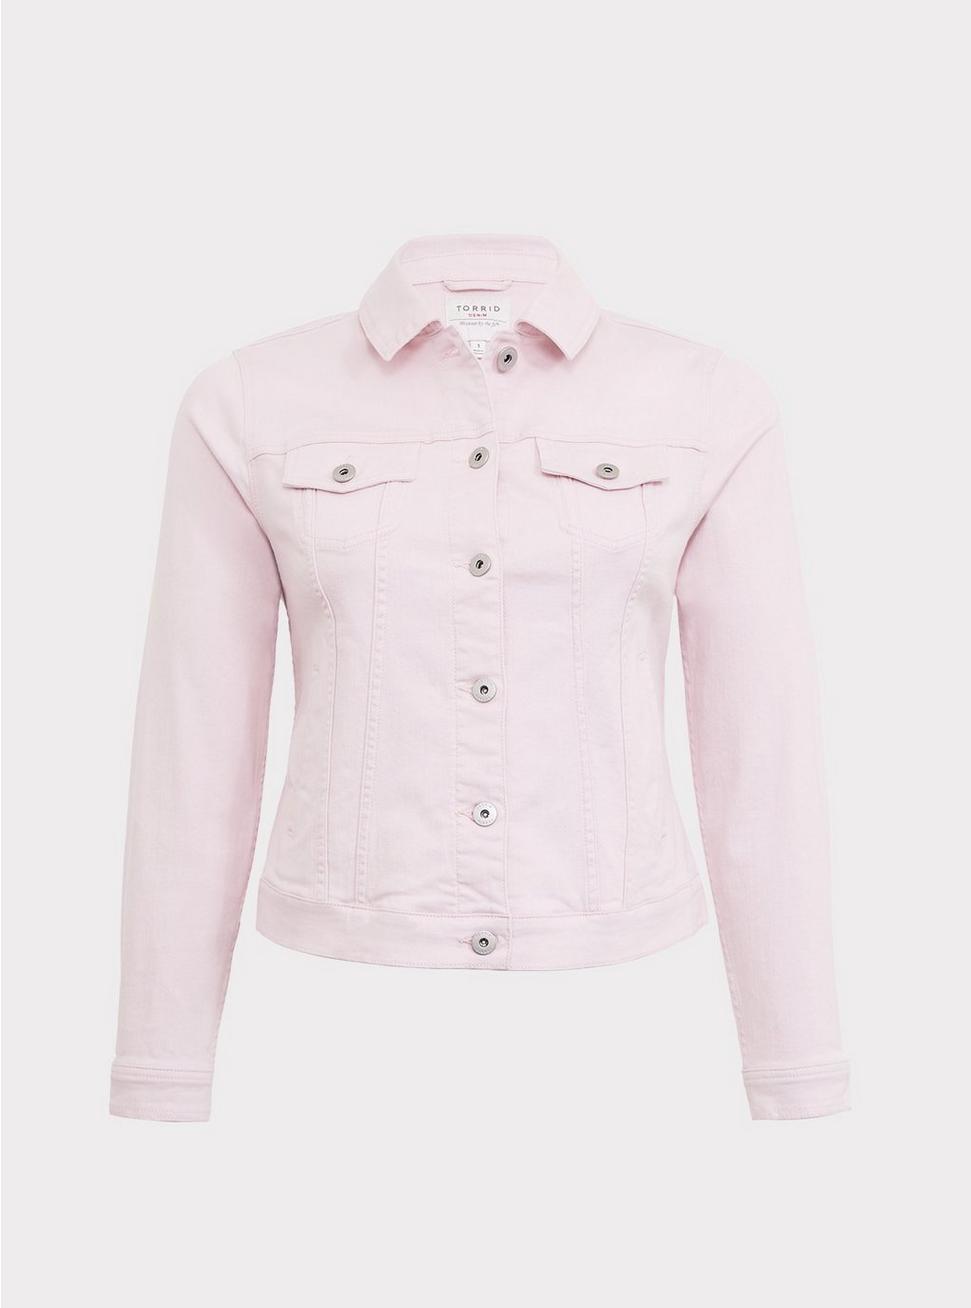 Plus Size - Light Pink Denim Jacket - Torrid